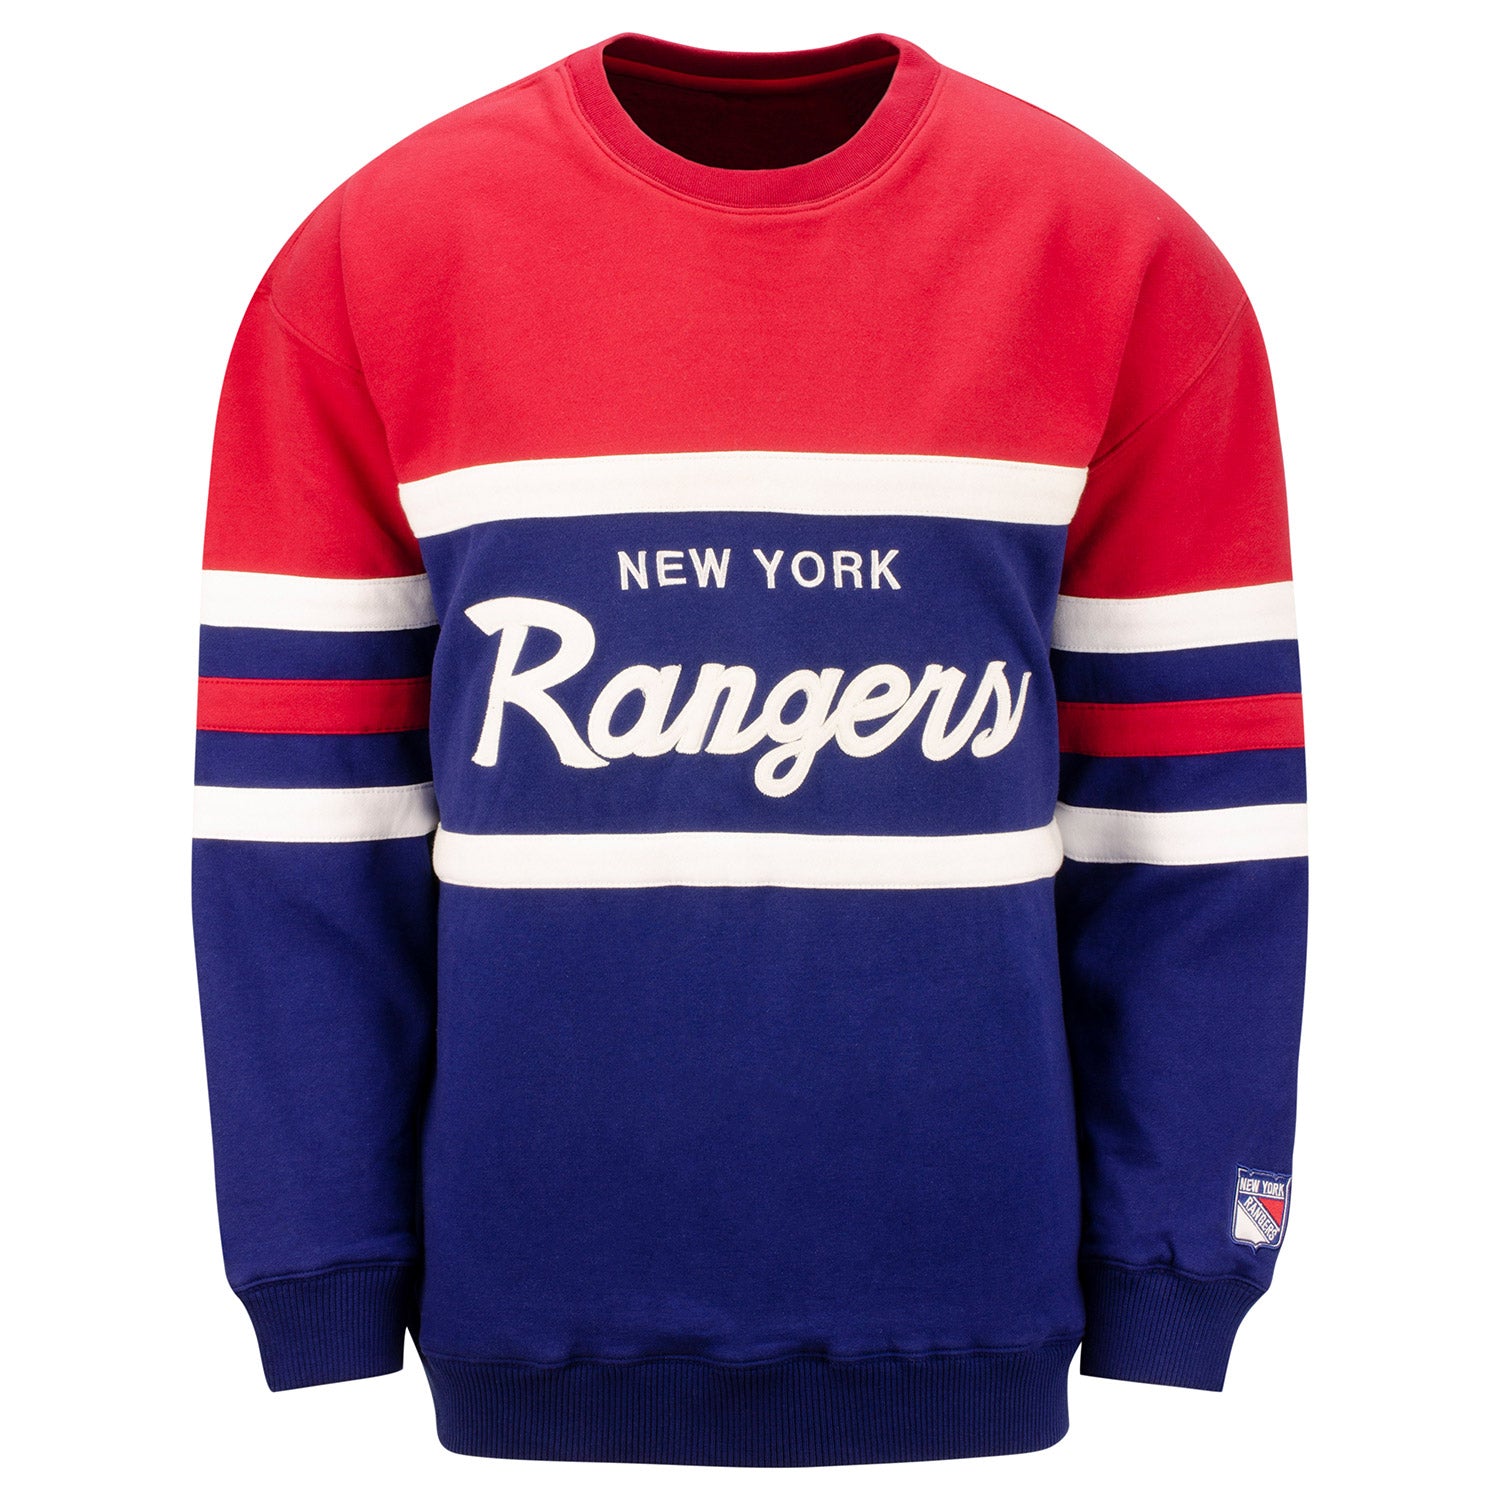 New York Rangers Crewneck Sweatshirts for Sale